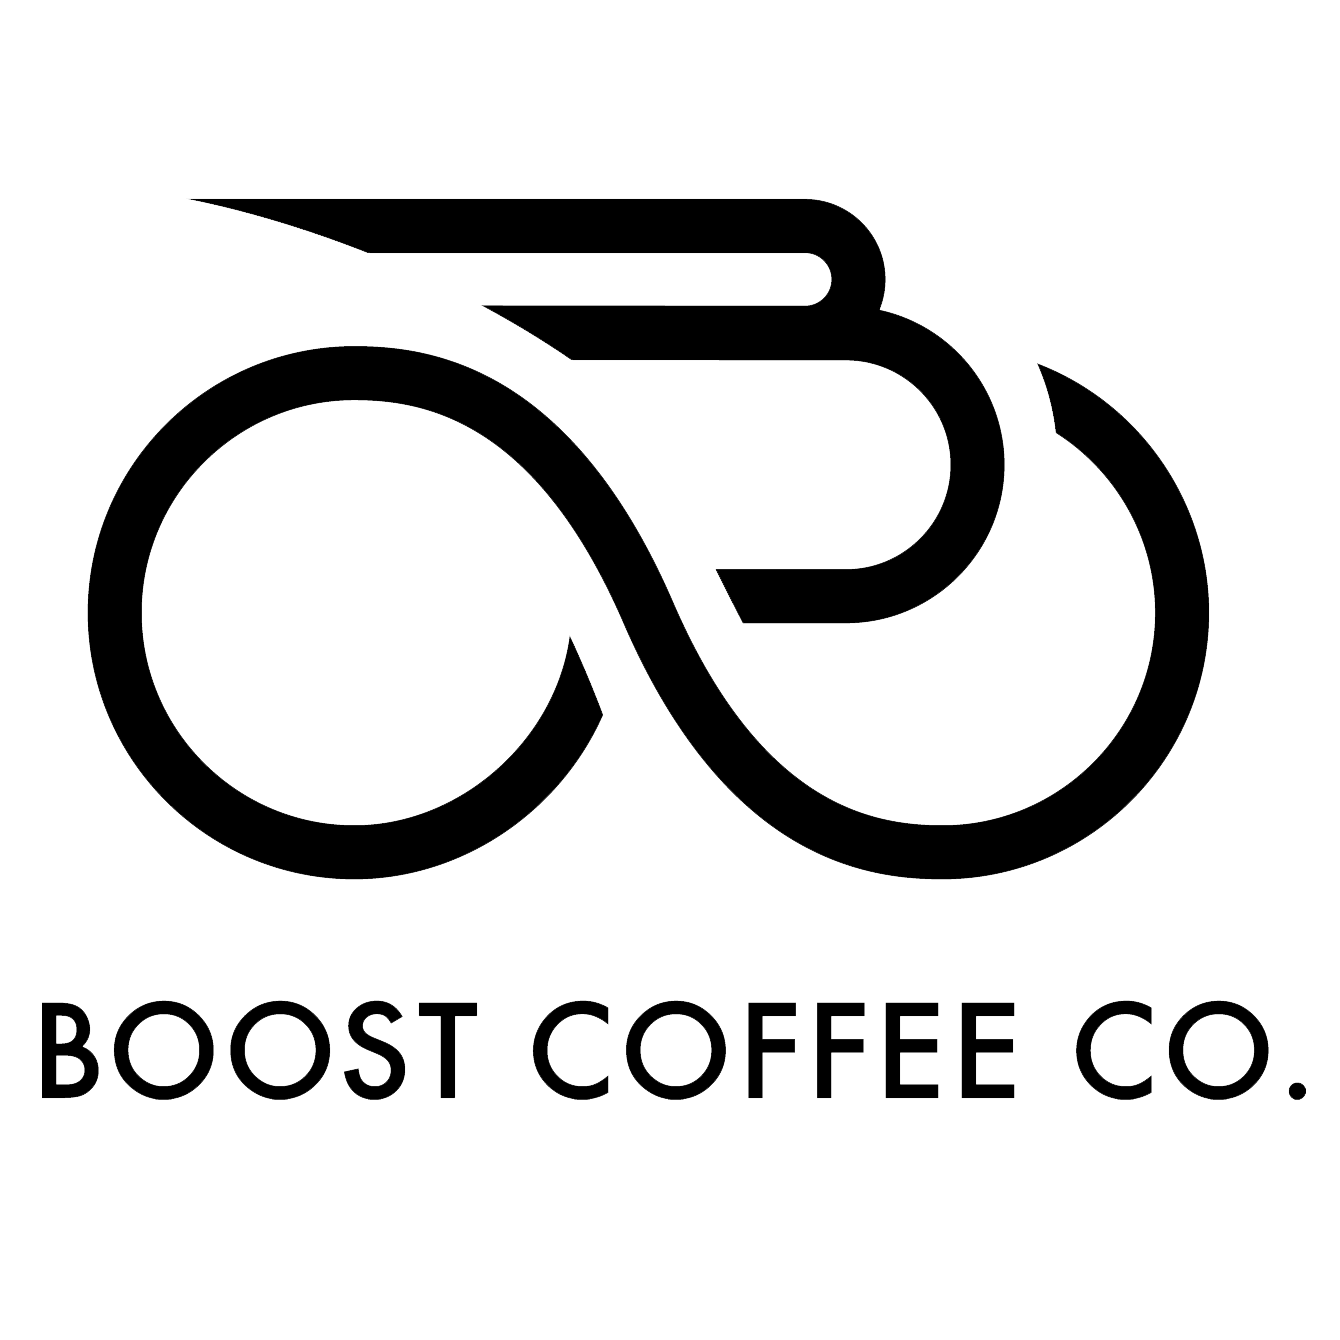 Boost Coffee Co. brand logo